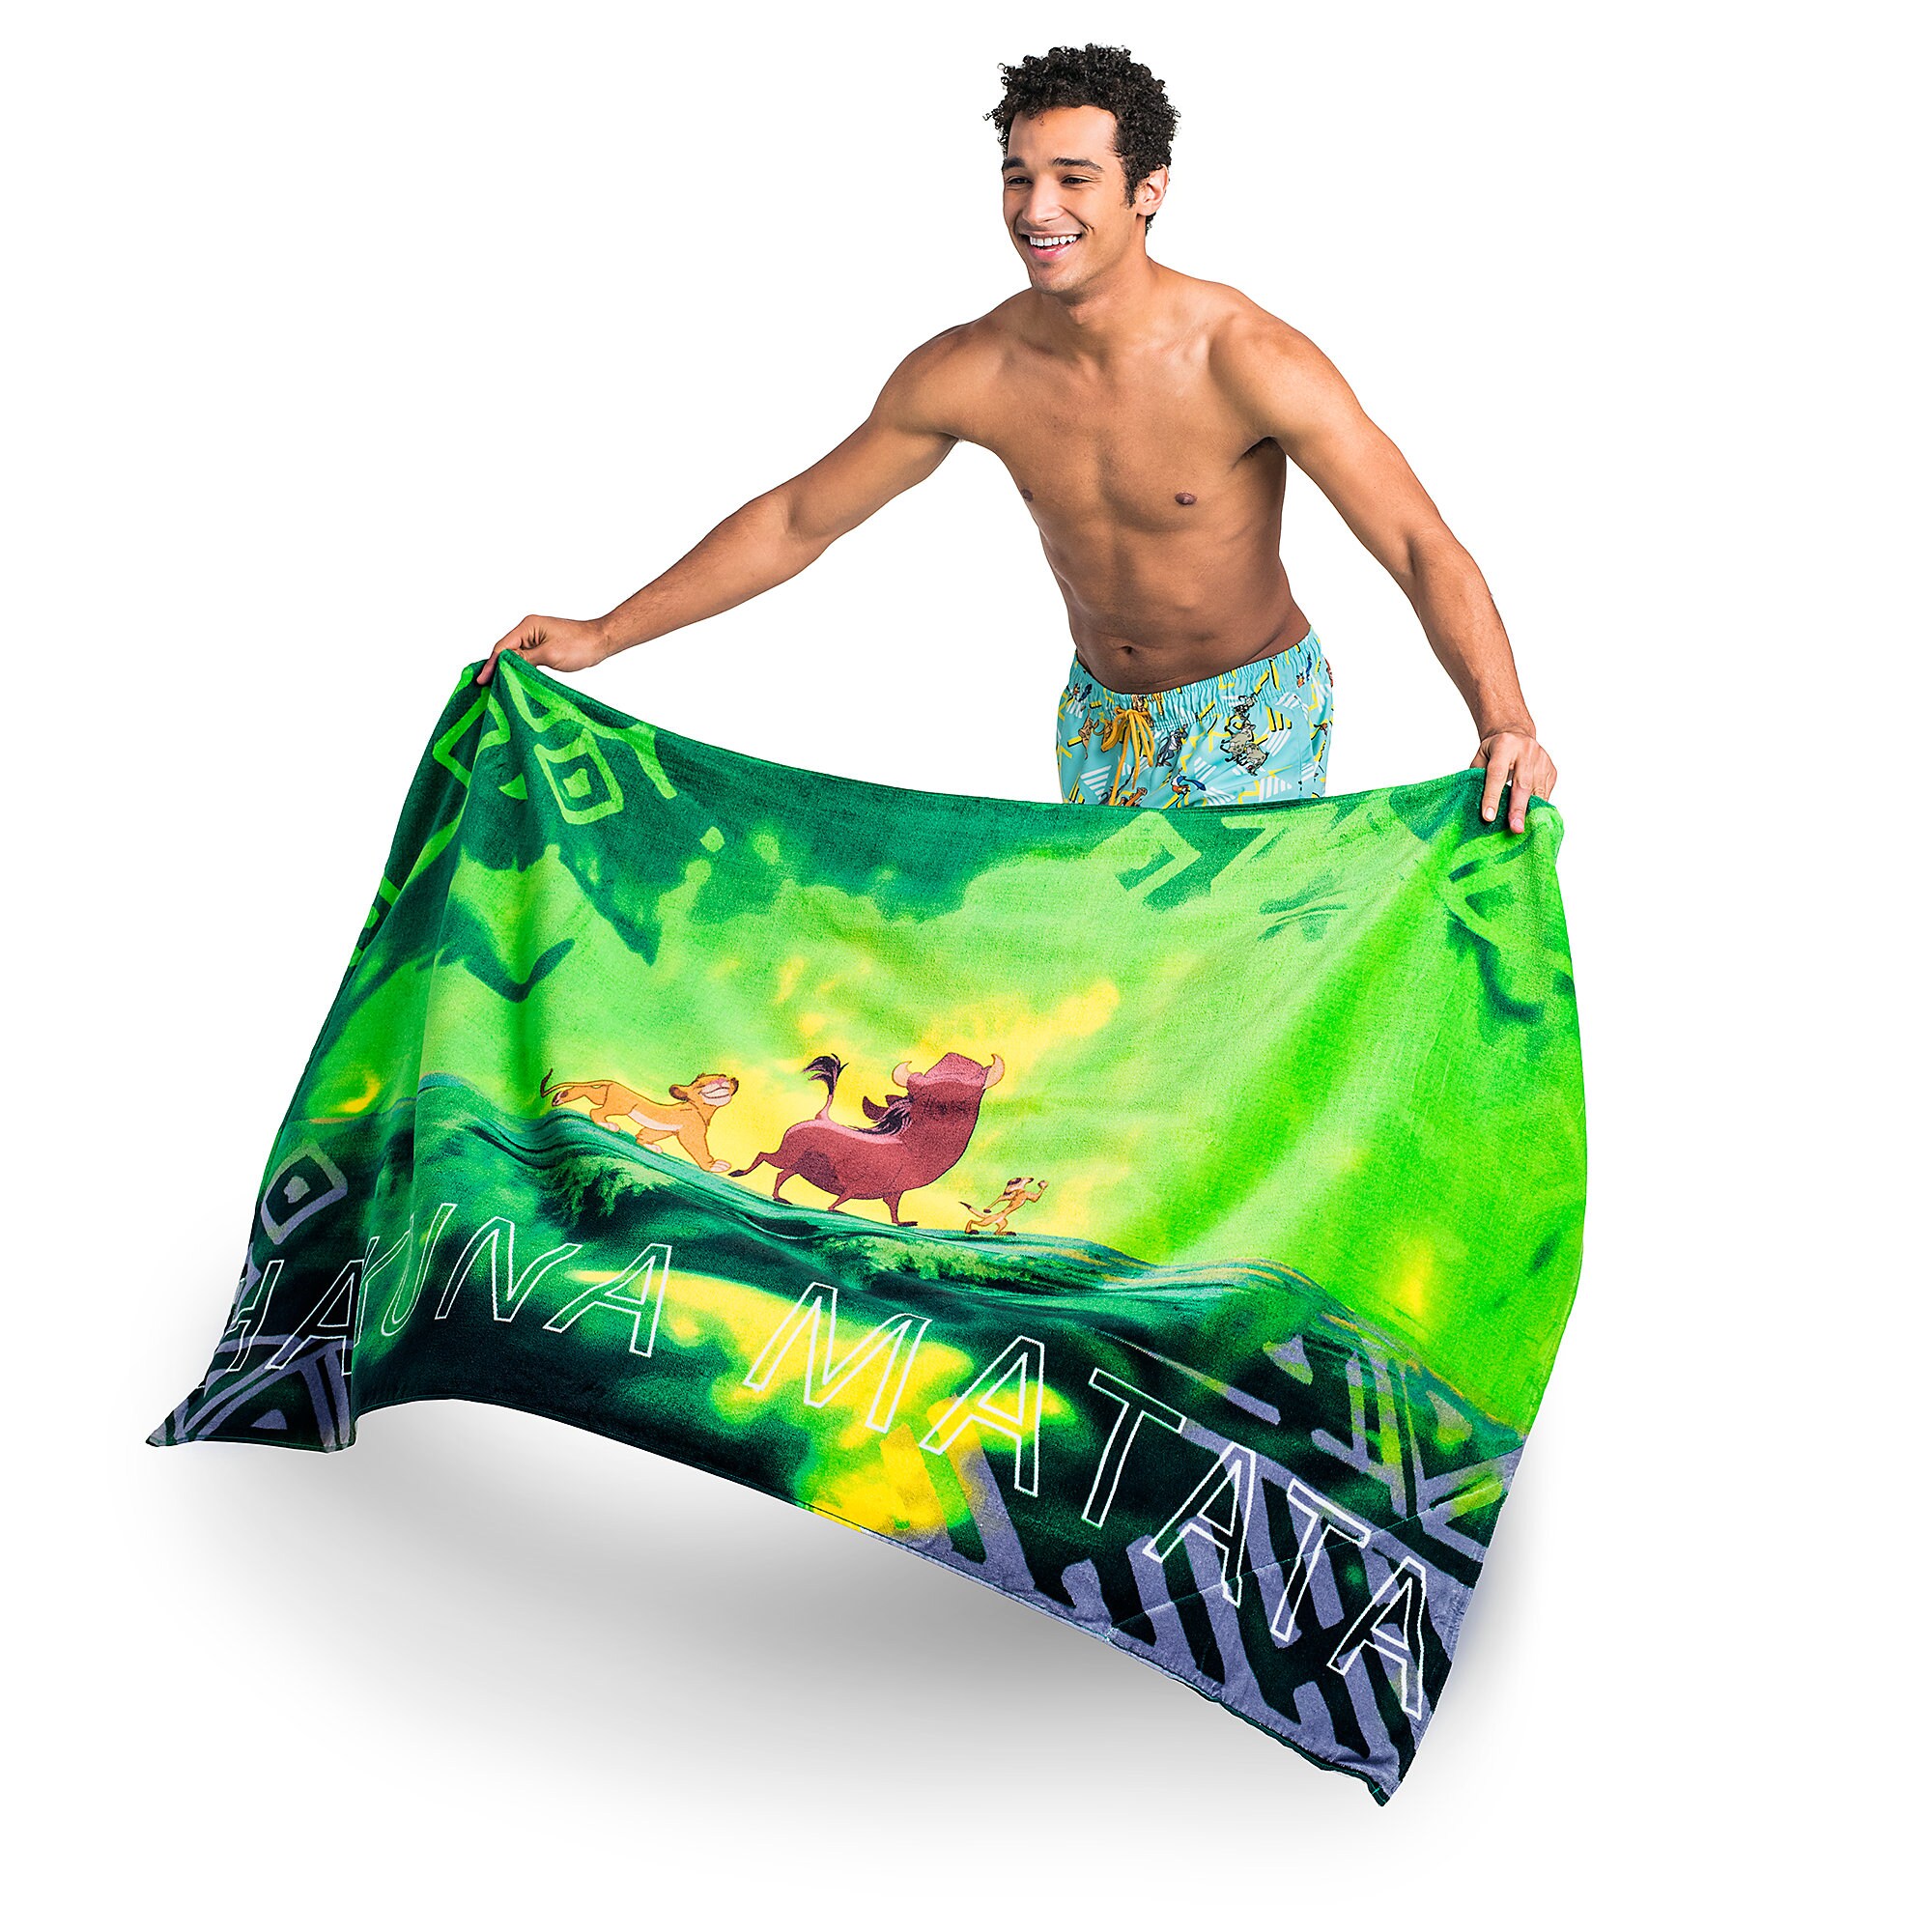 Hakuna Matata Beach Towel - The Lion King - Oh My Disney